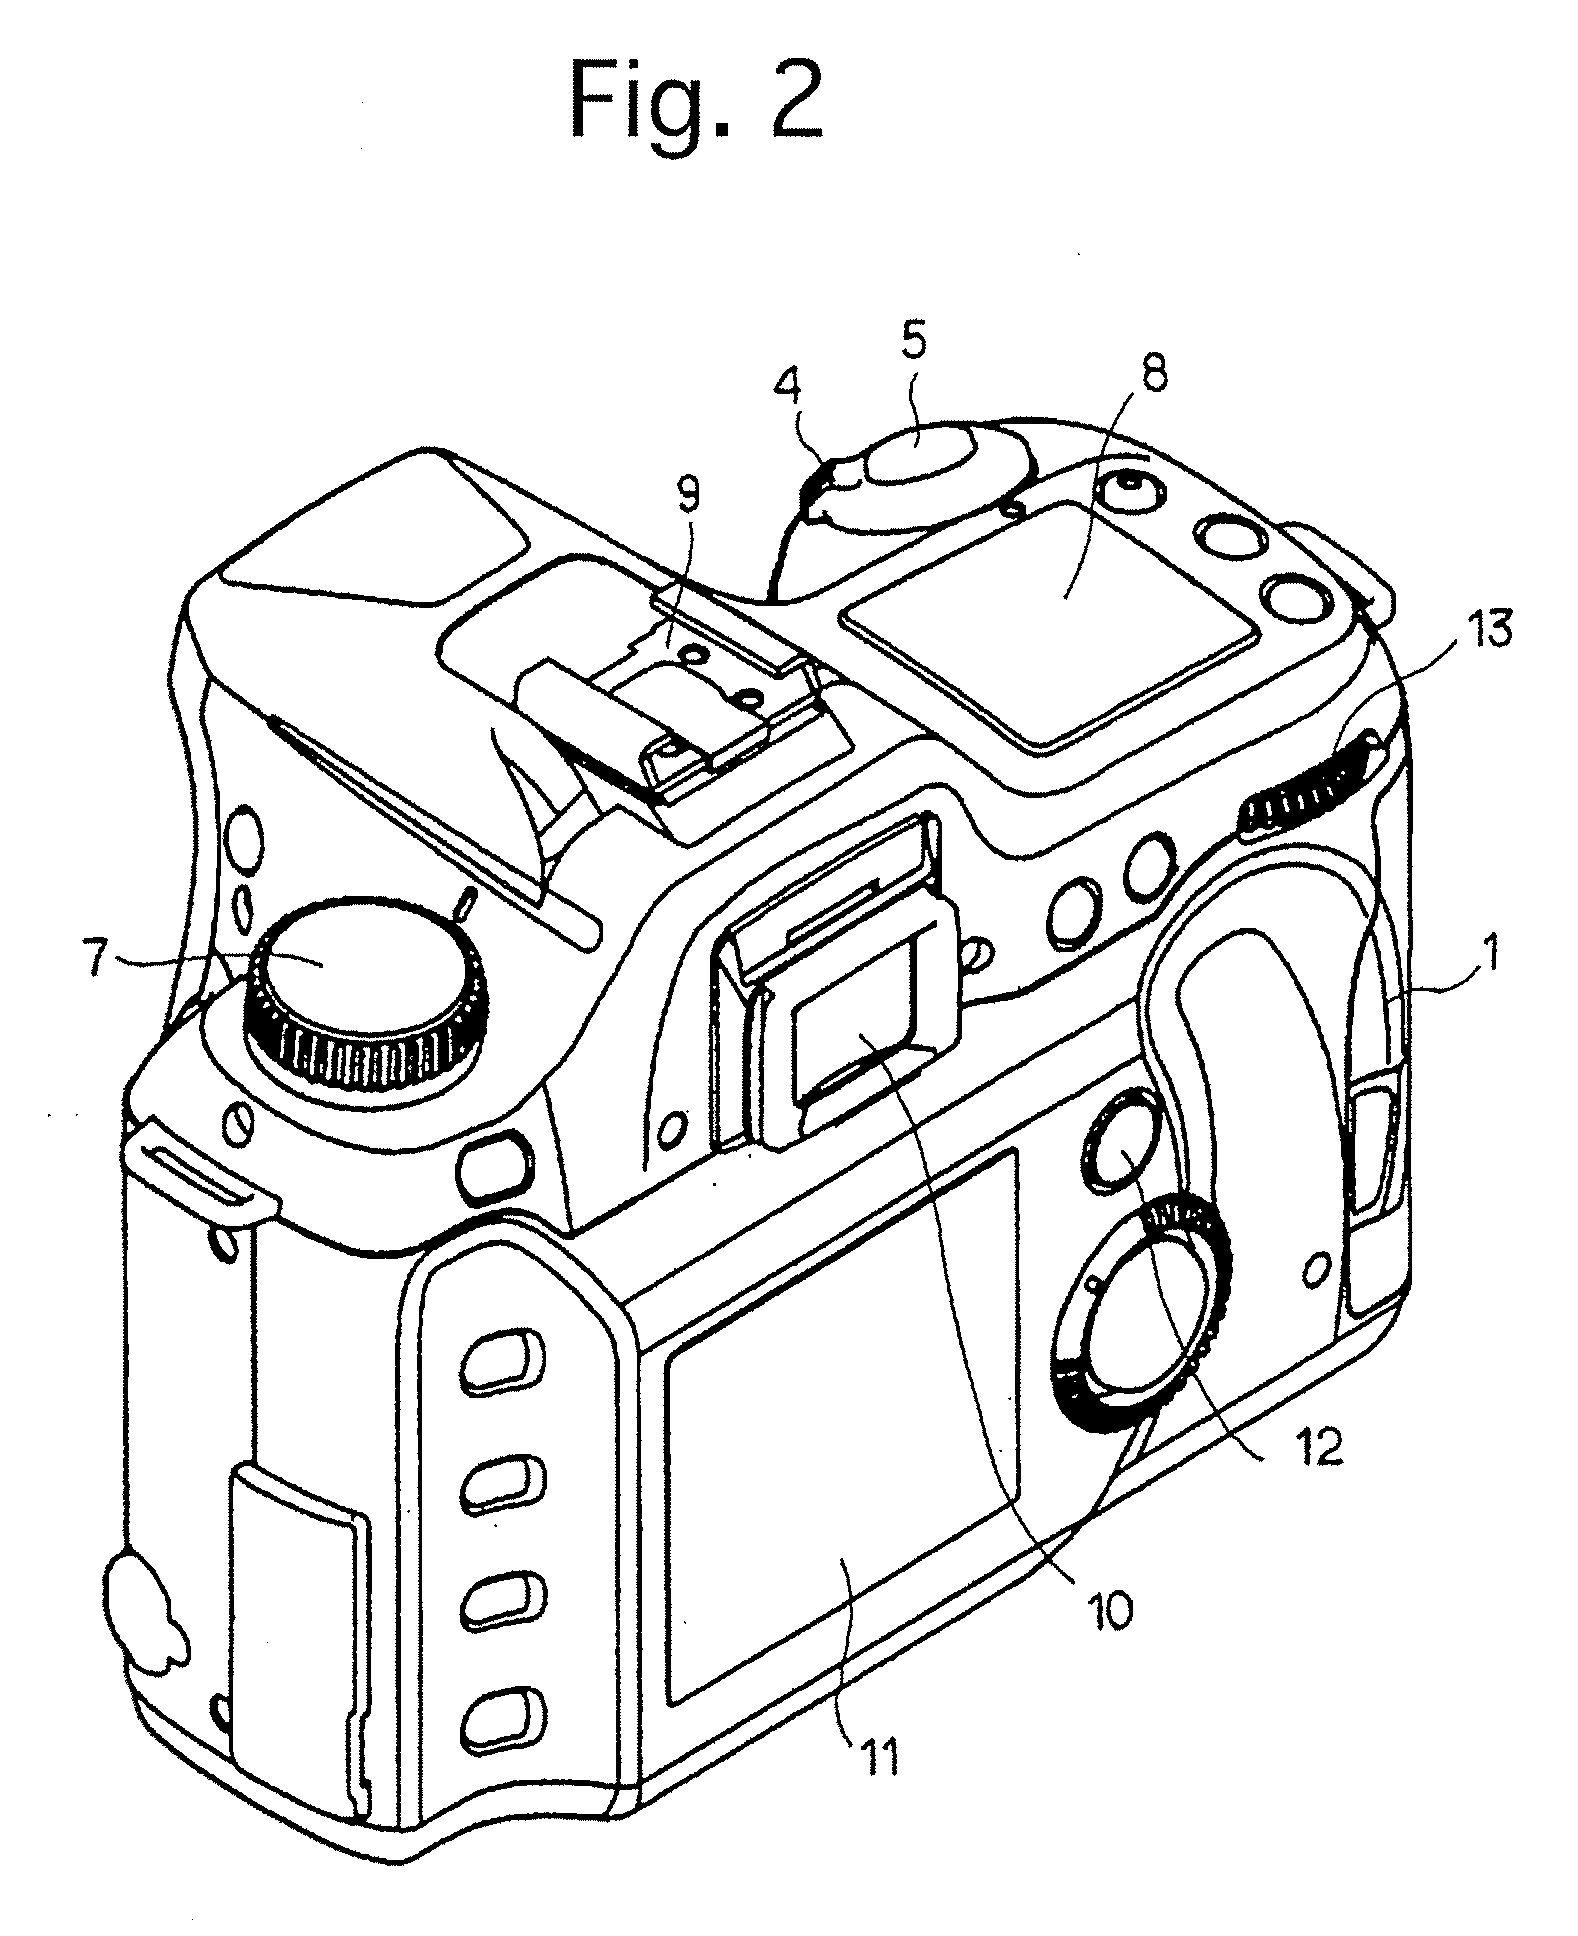 Single-lens-reflex digital camera